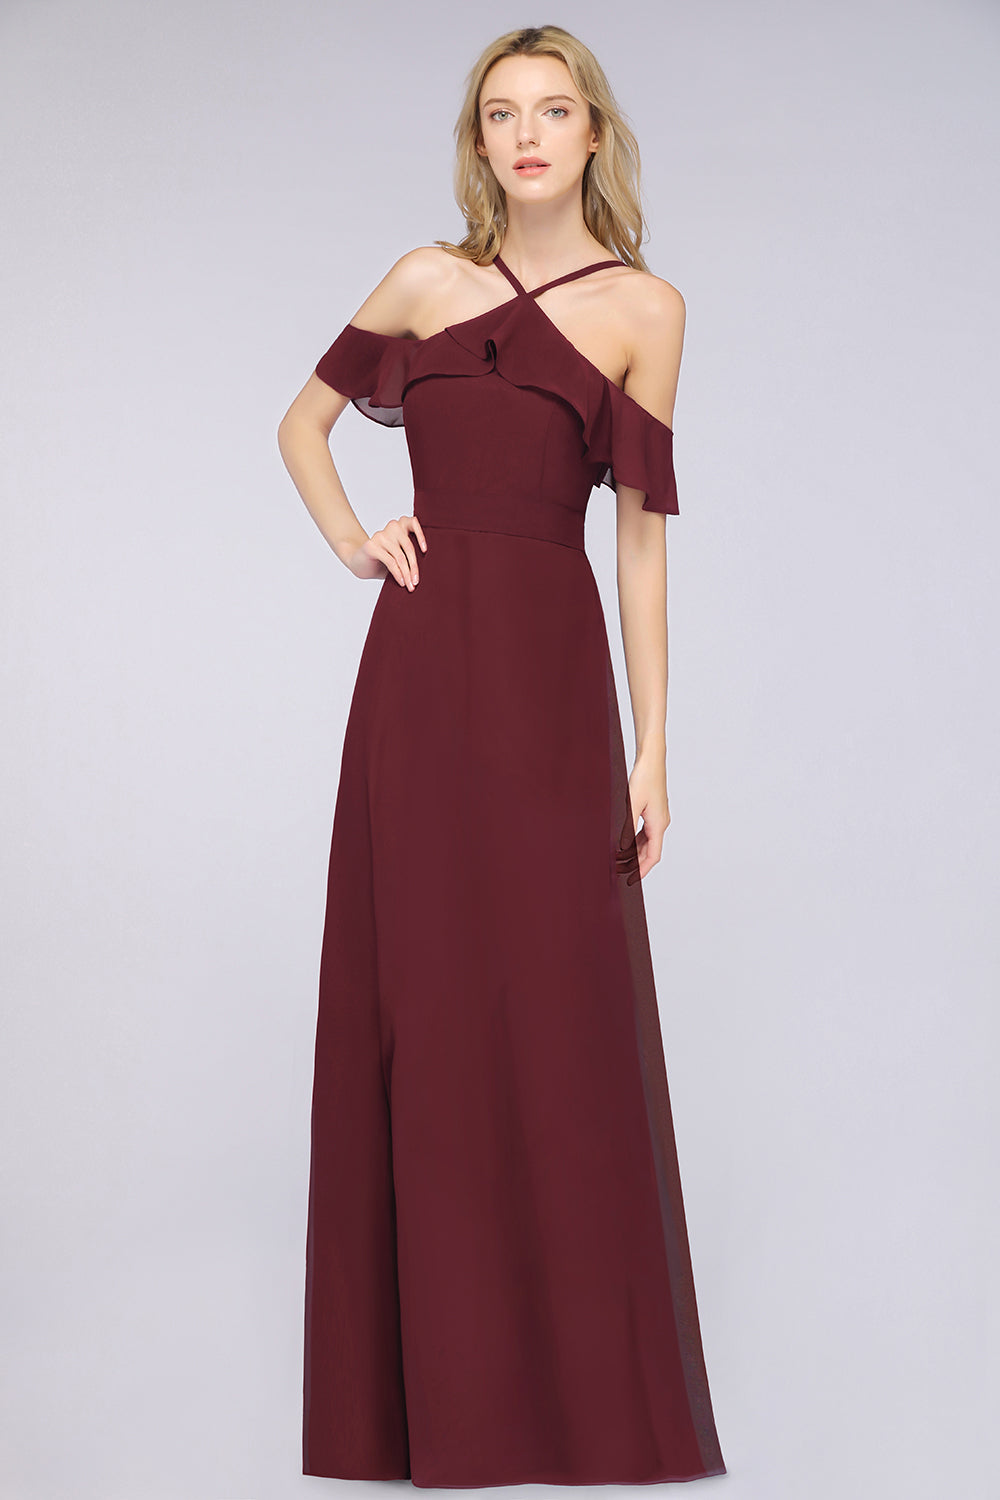 Affordable Spaghetti Straps Burgundy Long Bridesmaid Dress With Bow Sash-27dress